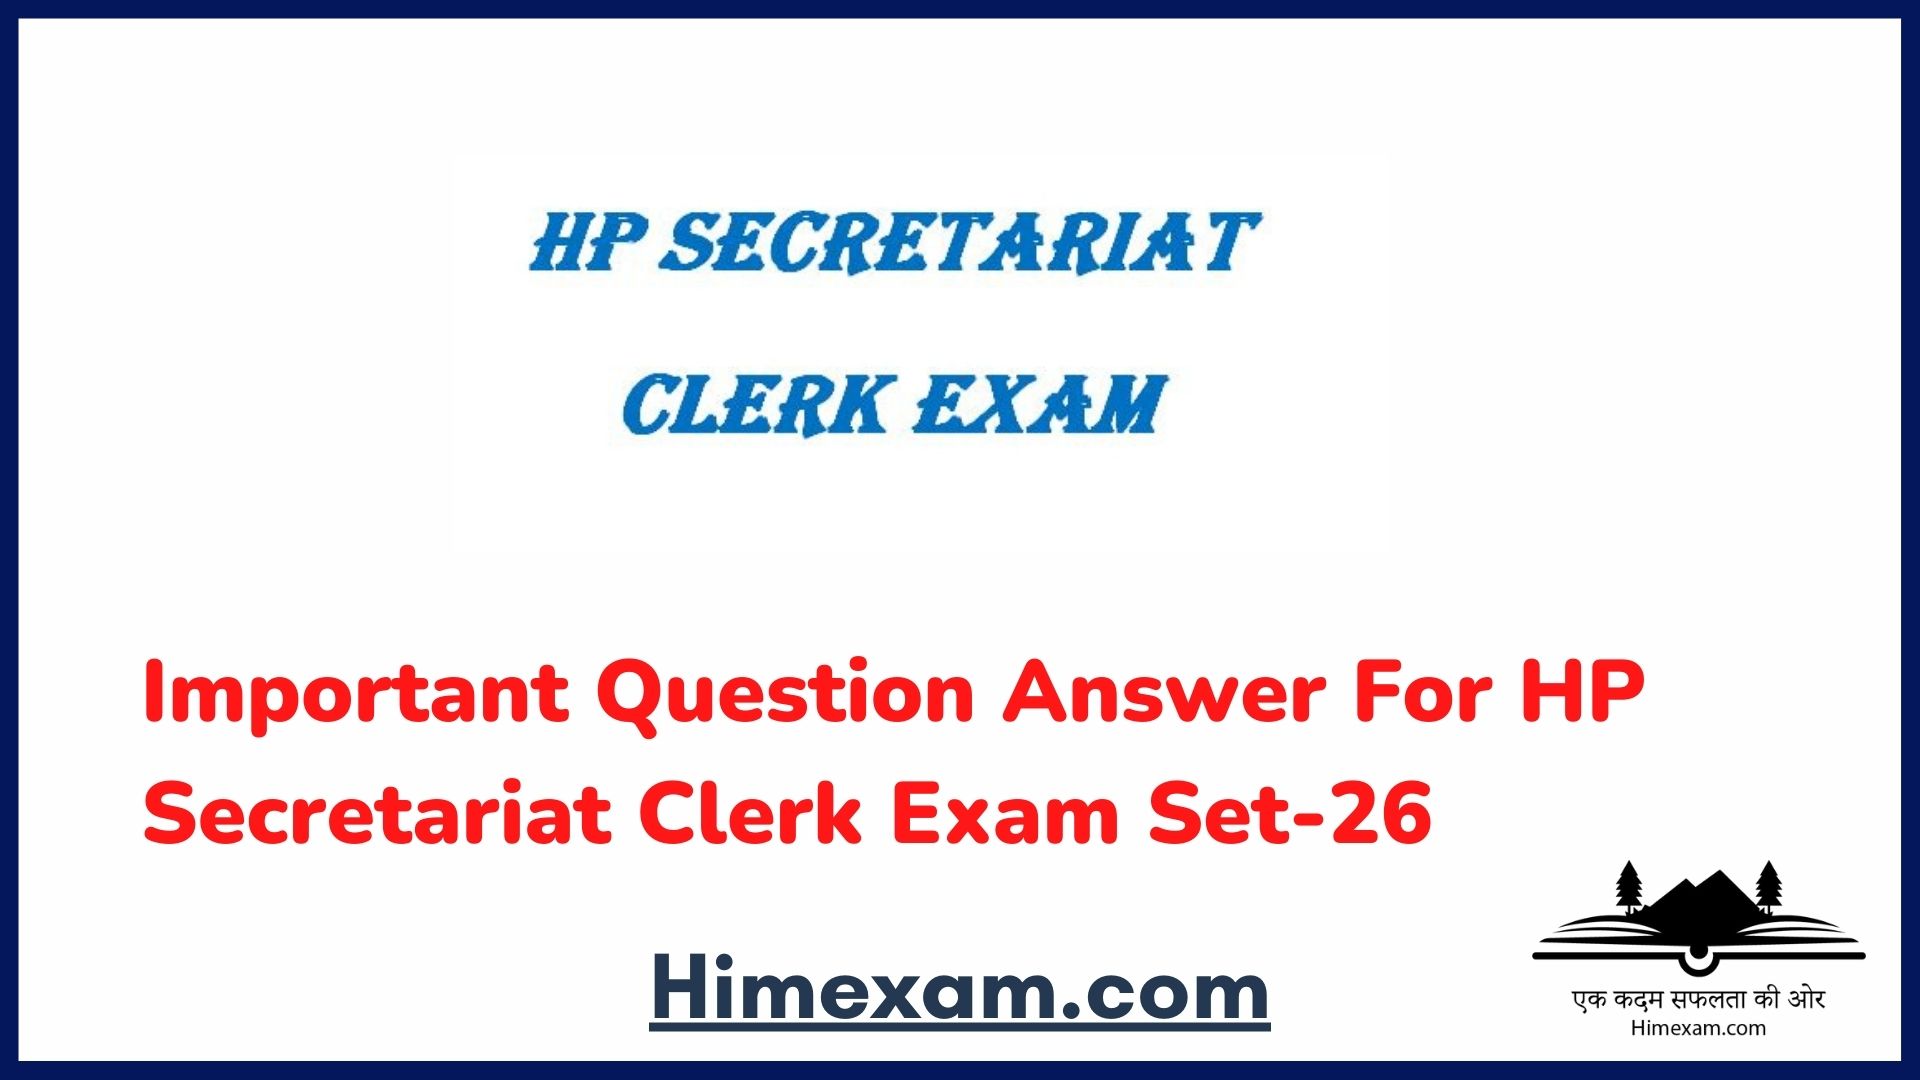 Important Question Answer For HP Secretariat Clerk Exam Set-26